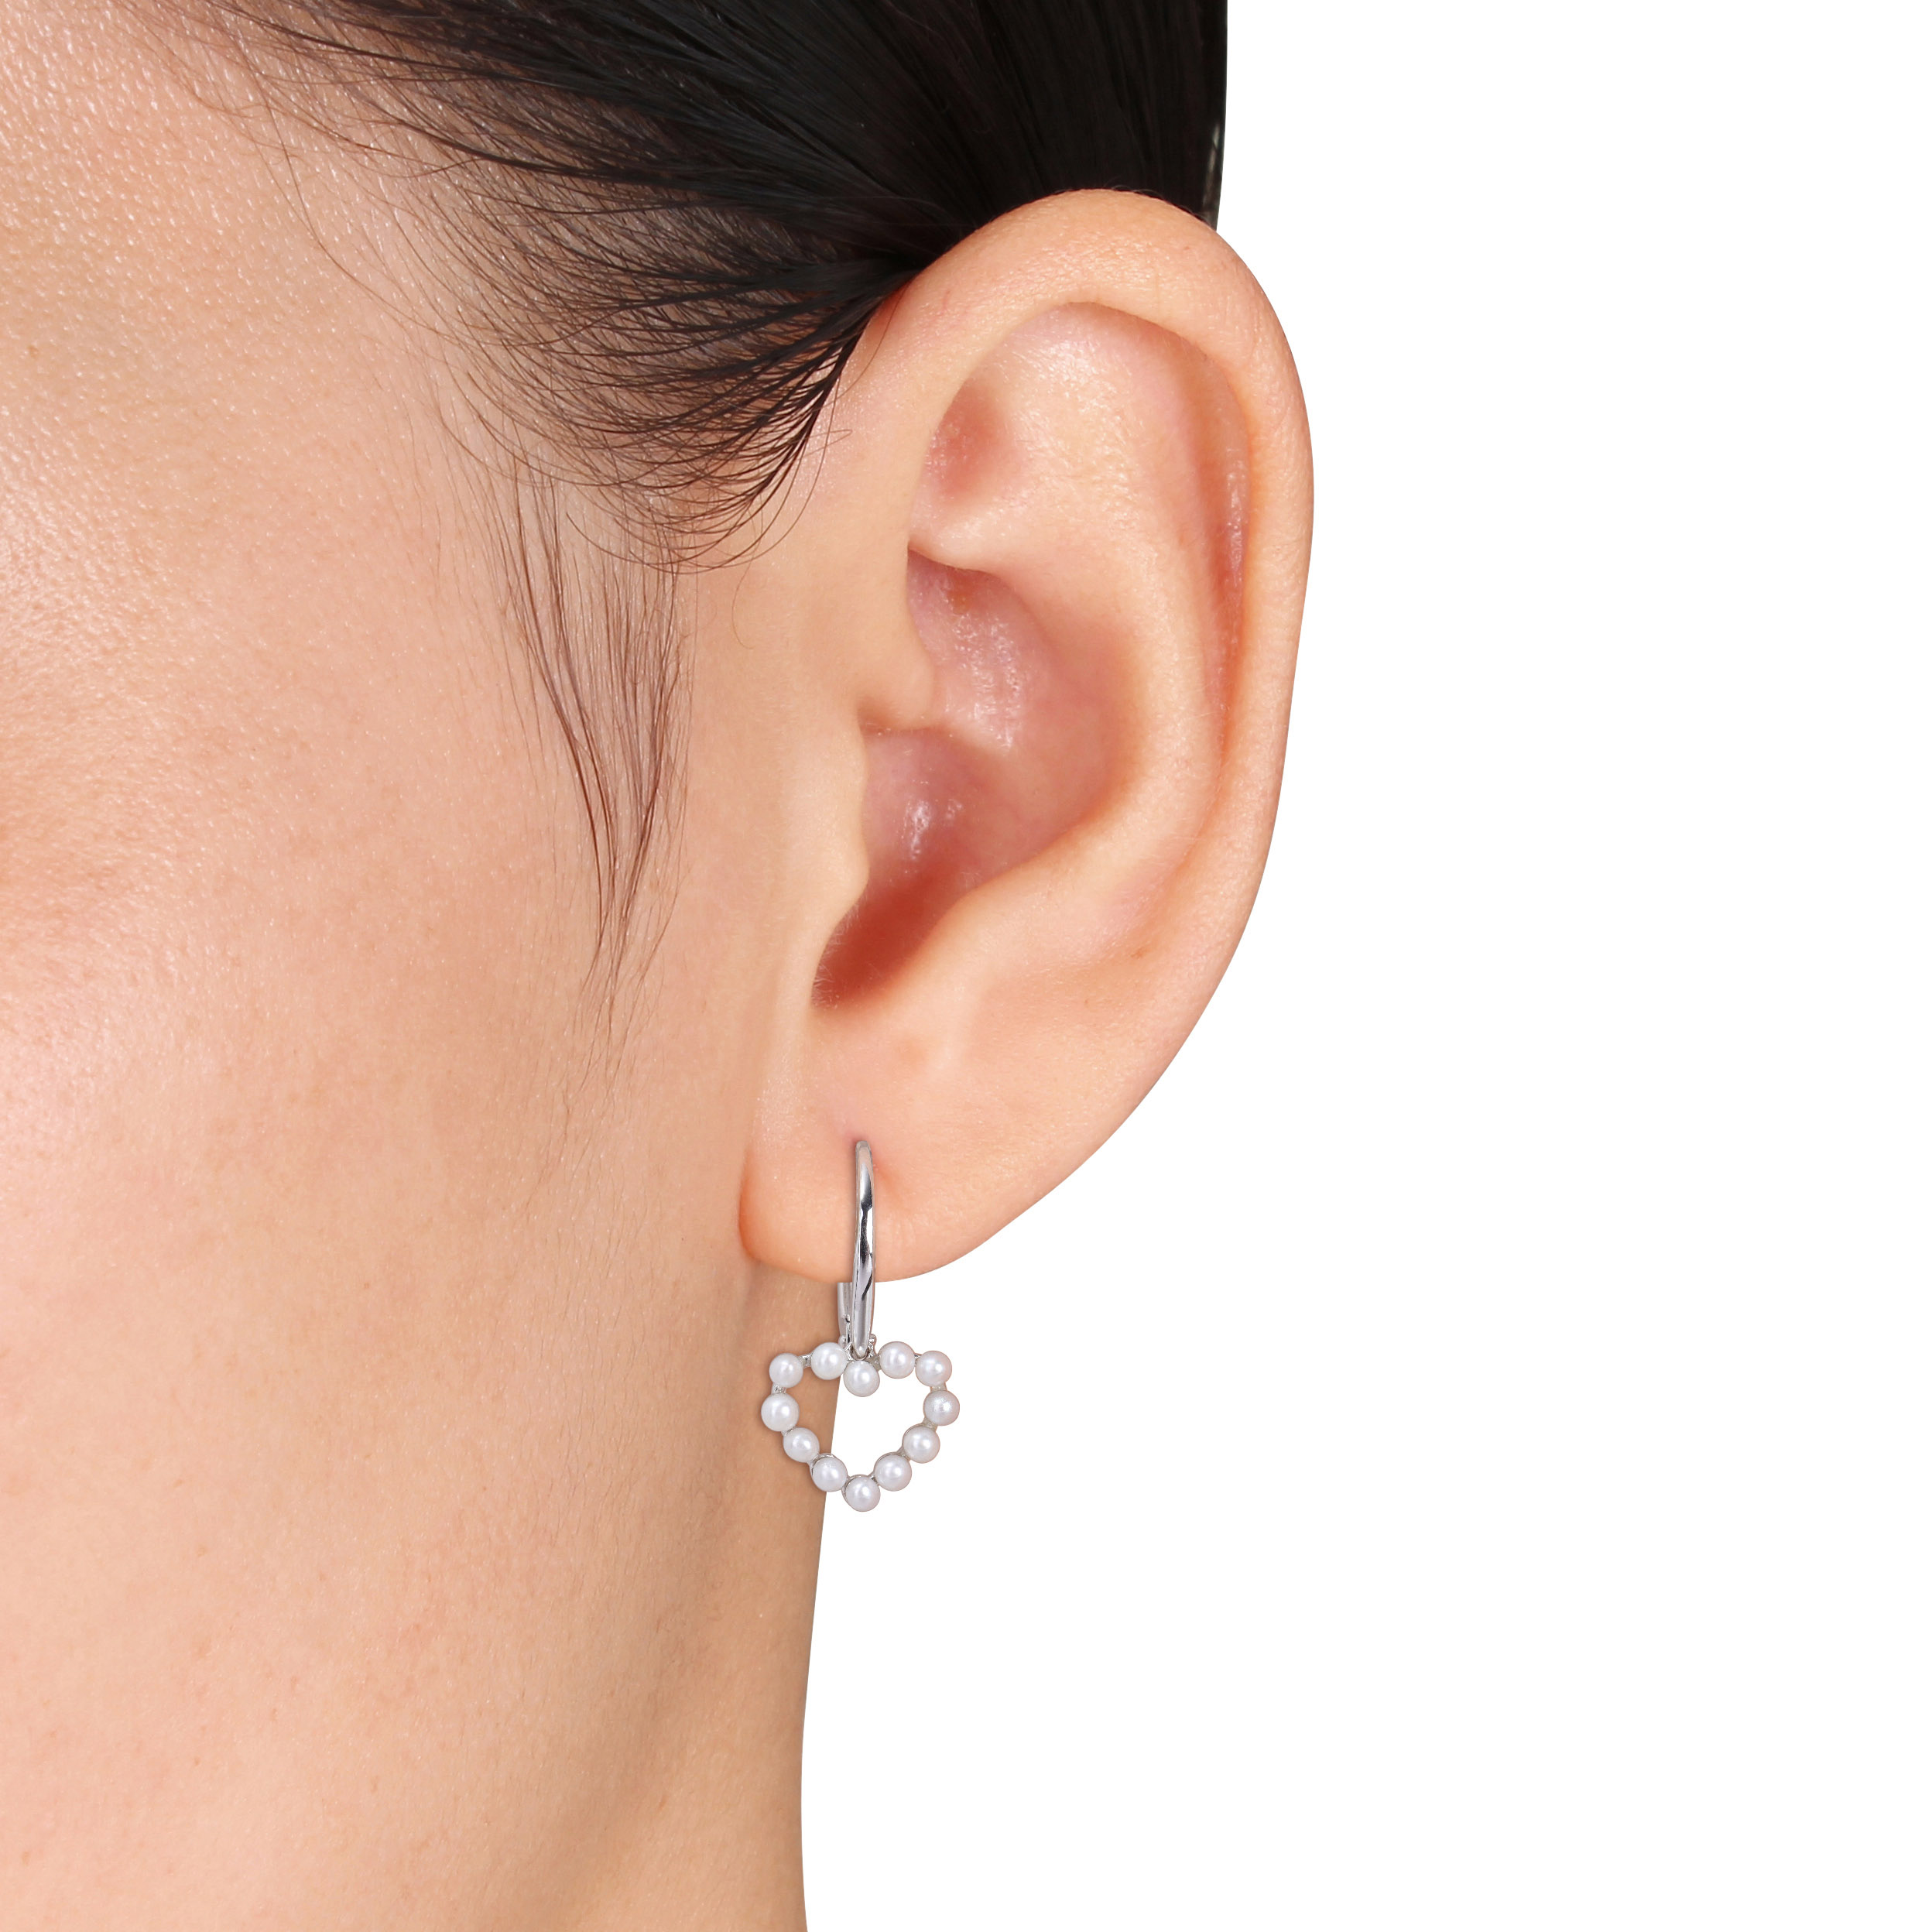 2 - 2.5 MM Cultured Freshwater Pearl Heart Leverback Earrings in 14k White Gold